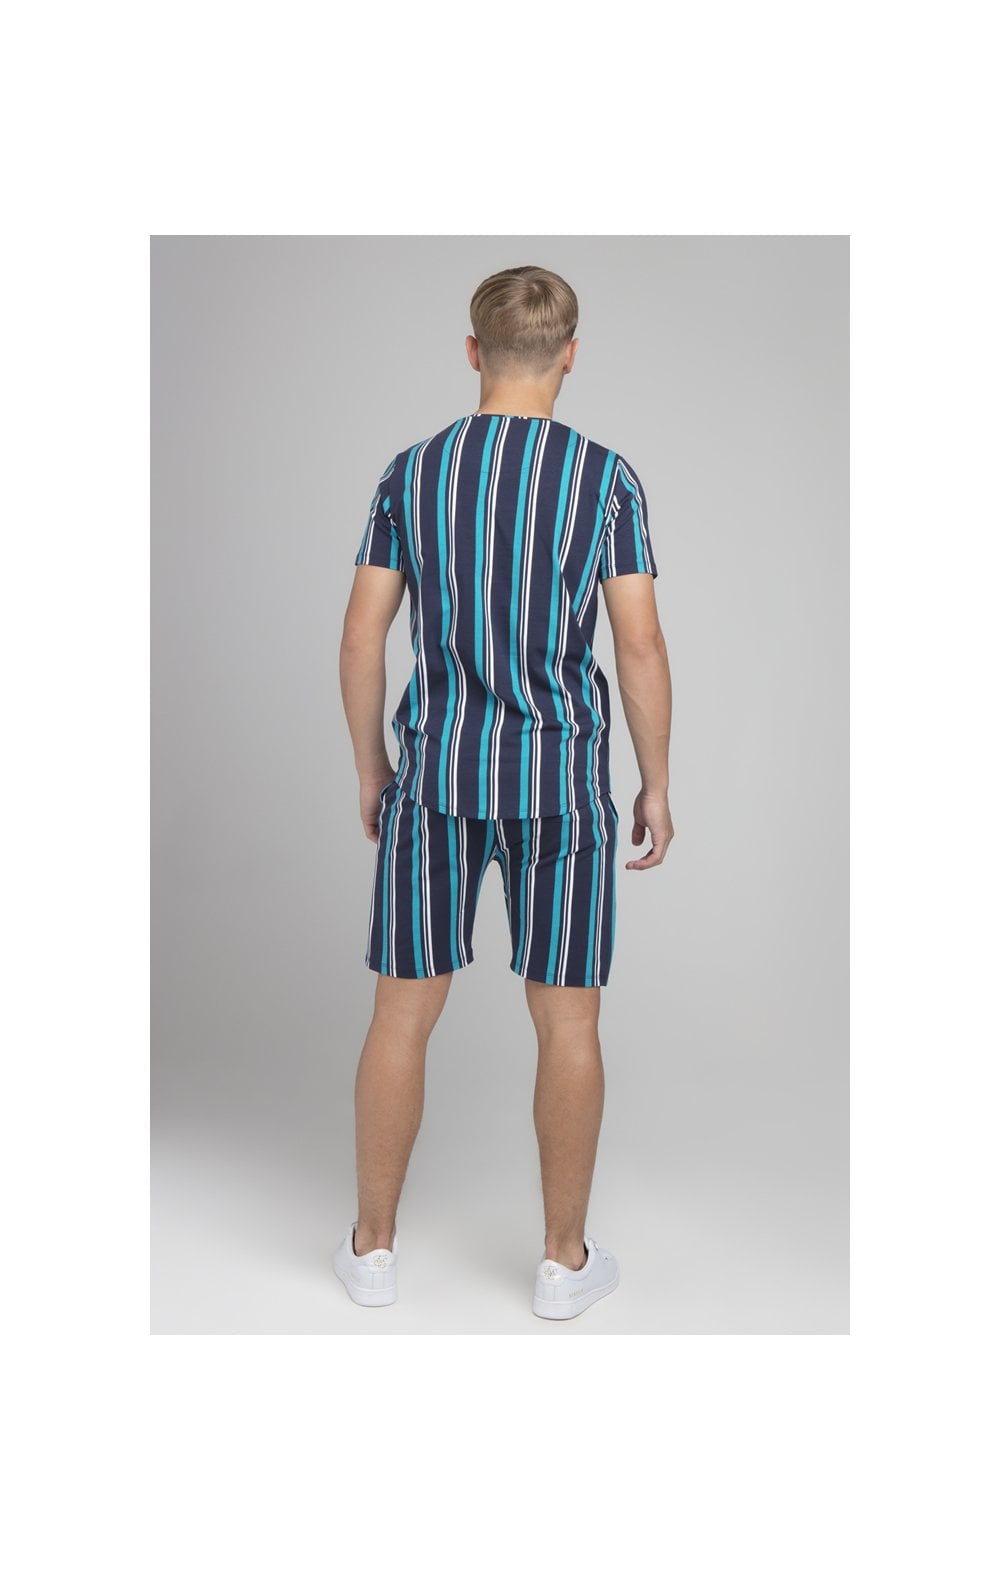 Illusive London Stripe Shorts - Navy & Teal (6)